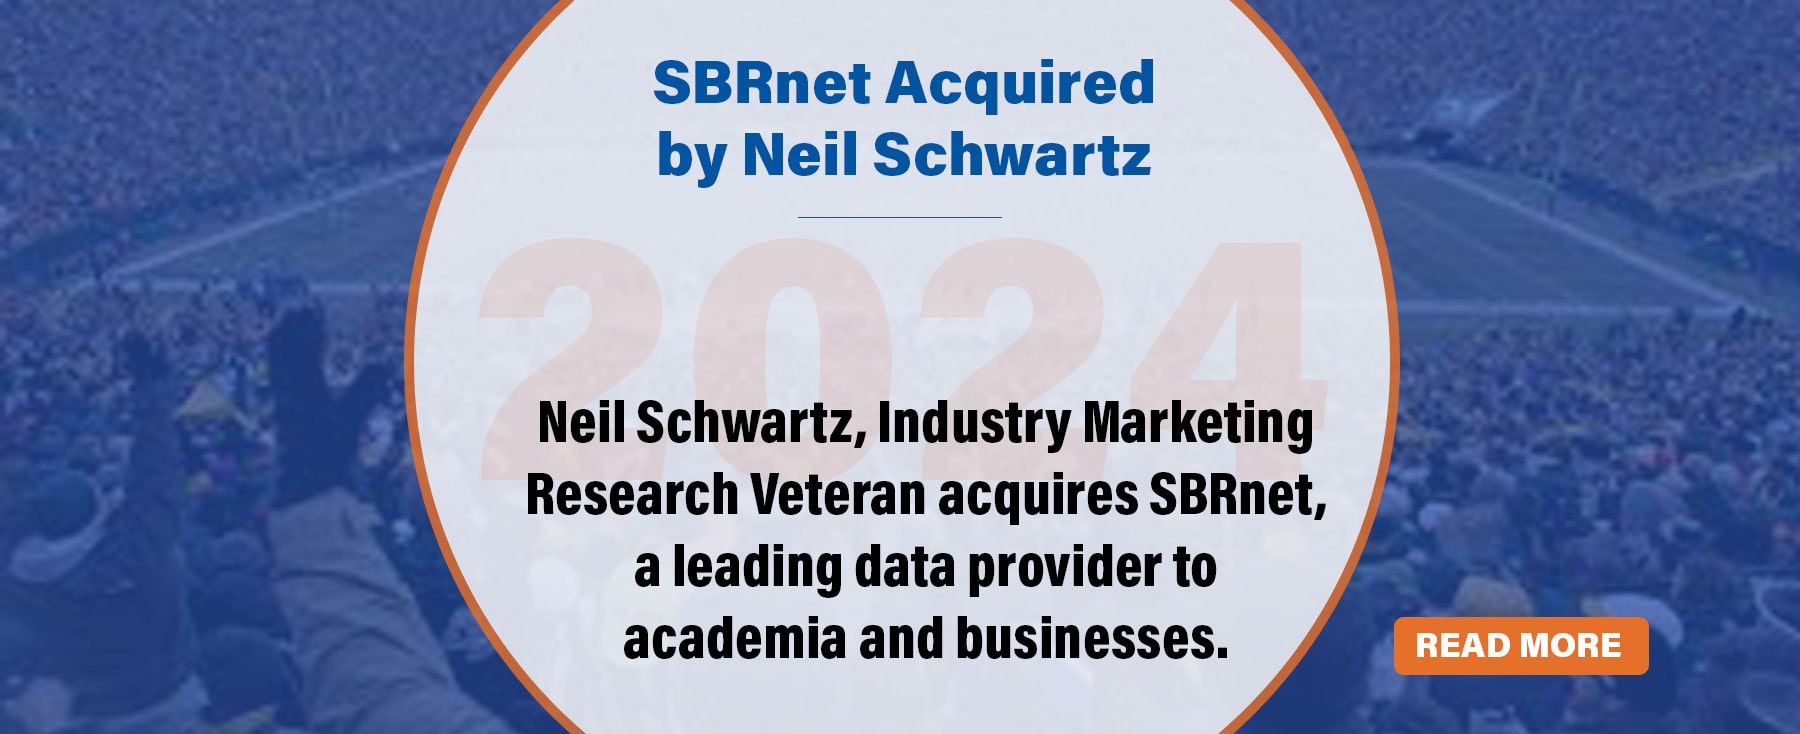 SBRnet Acquired by Neil Schwartz